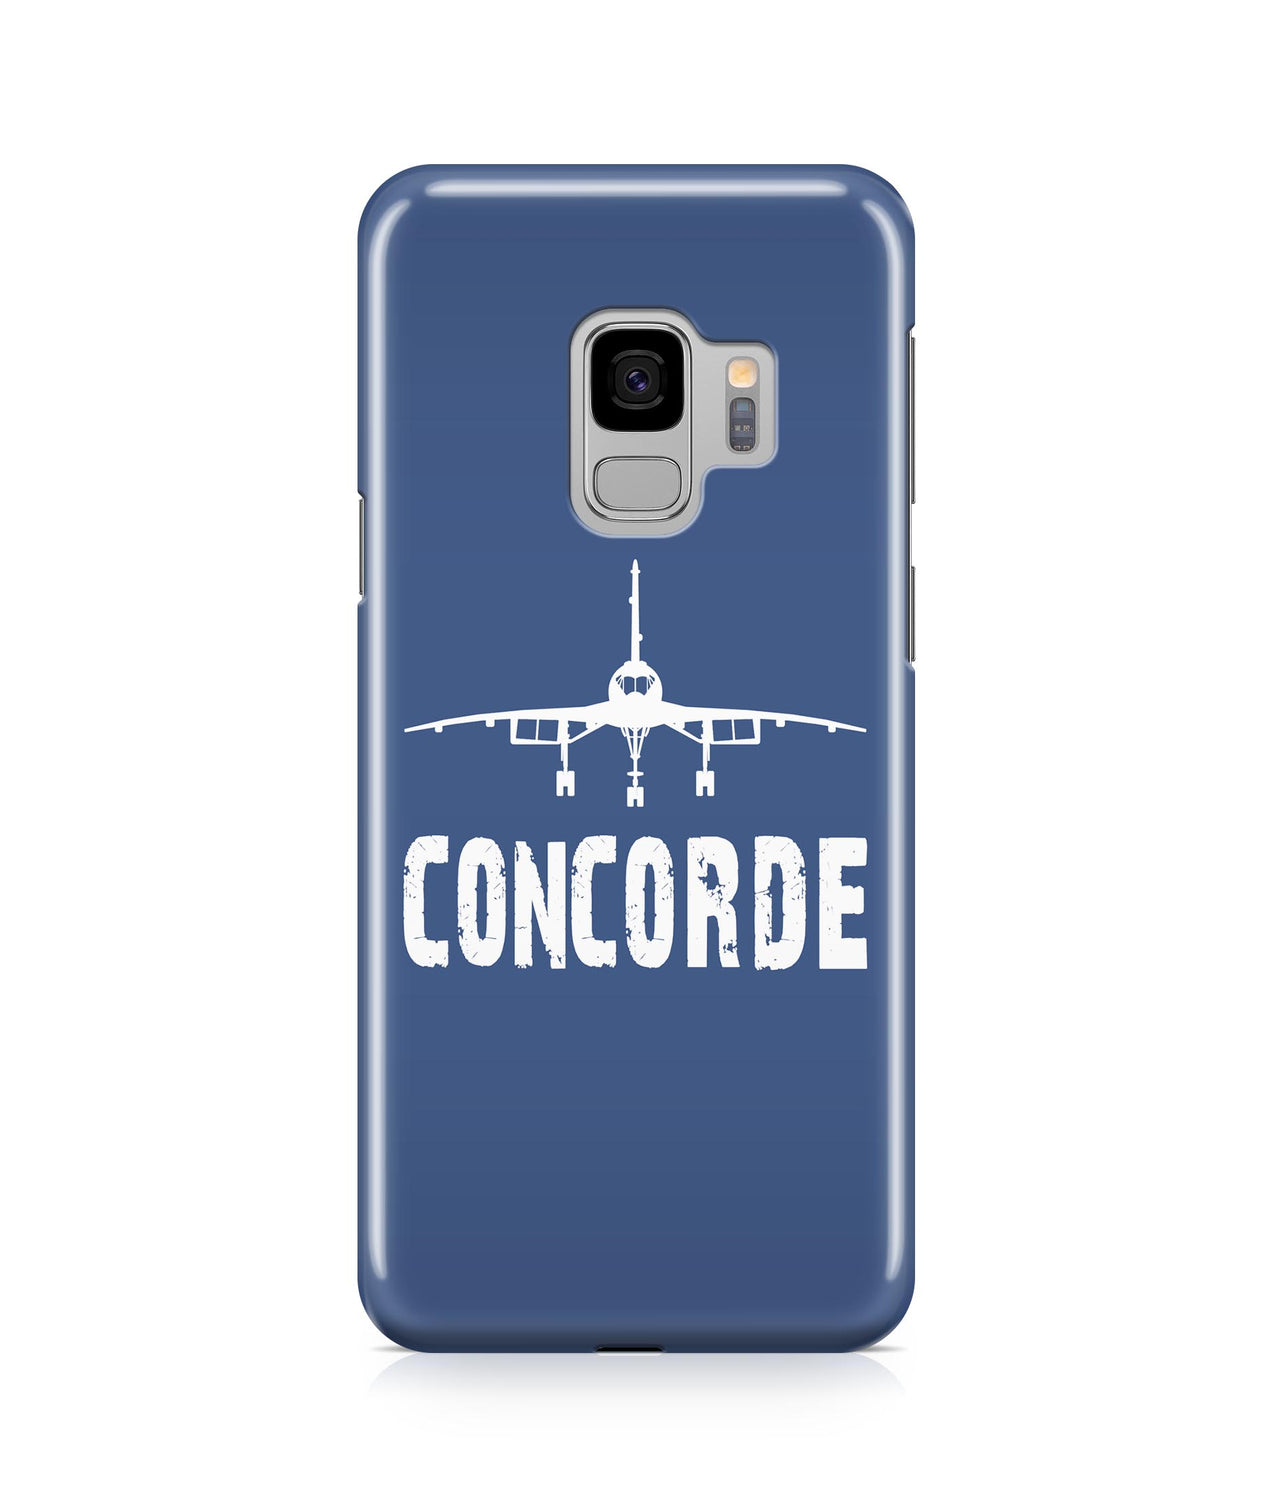 Concorde Plane & Designed Samsung J Cases